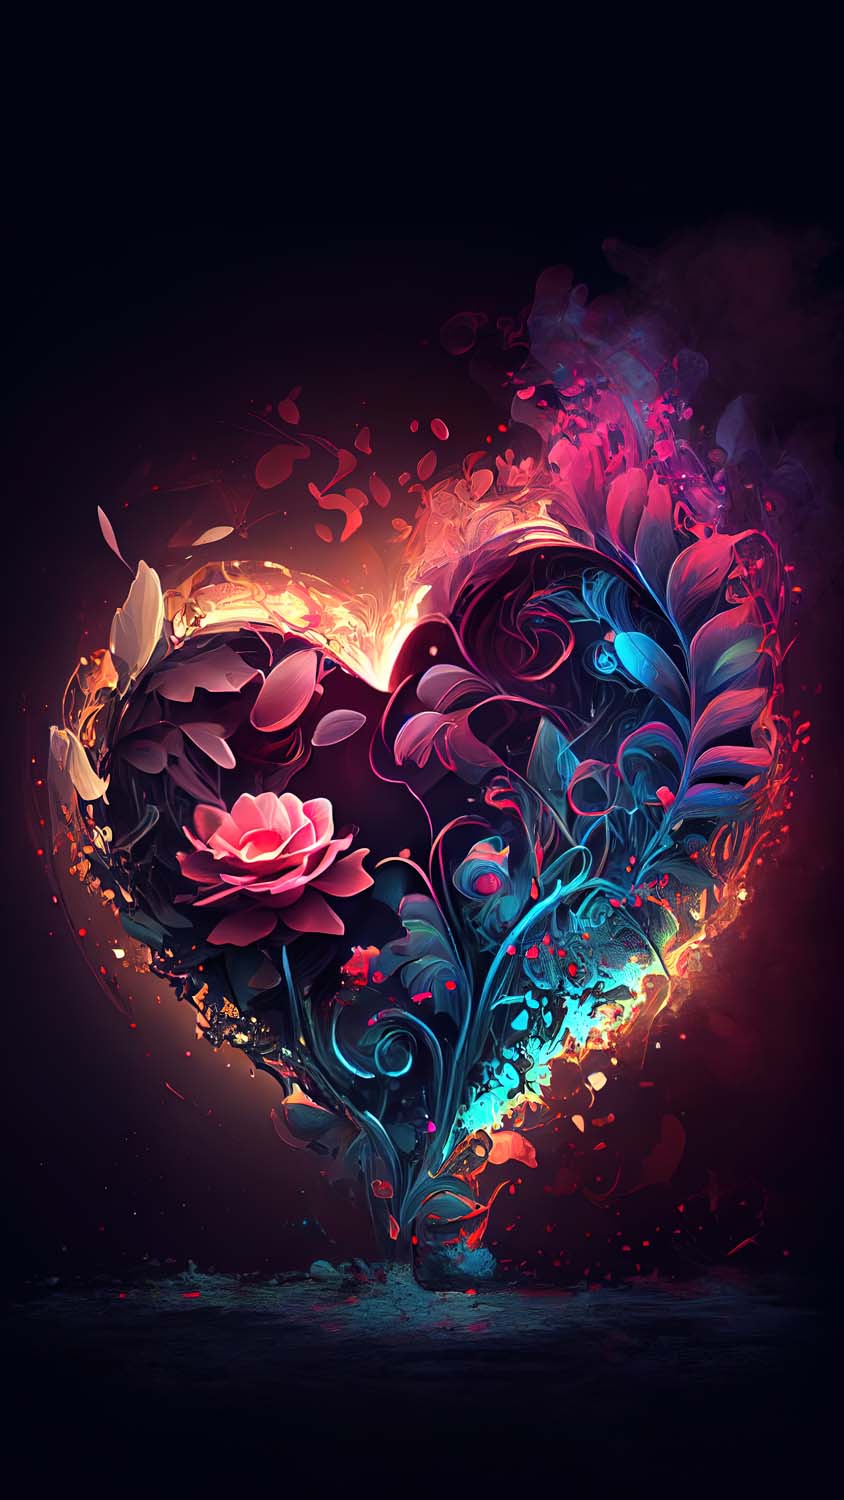 Floral Heart iPhone Wallpaper HD